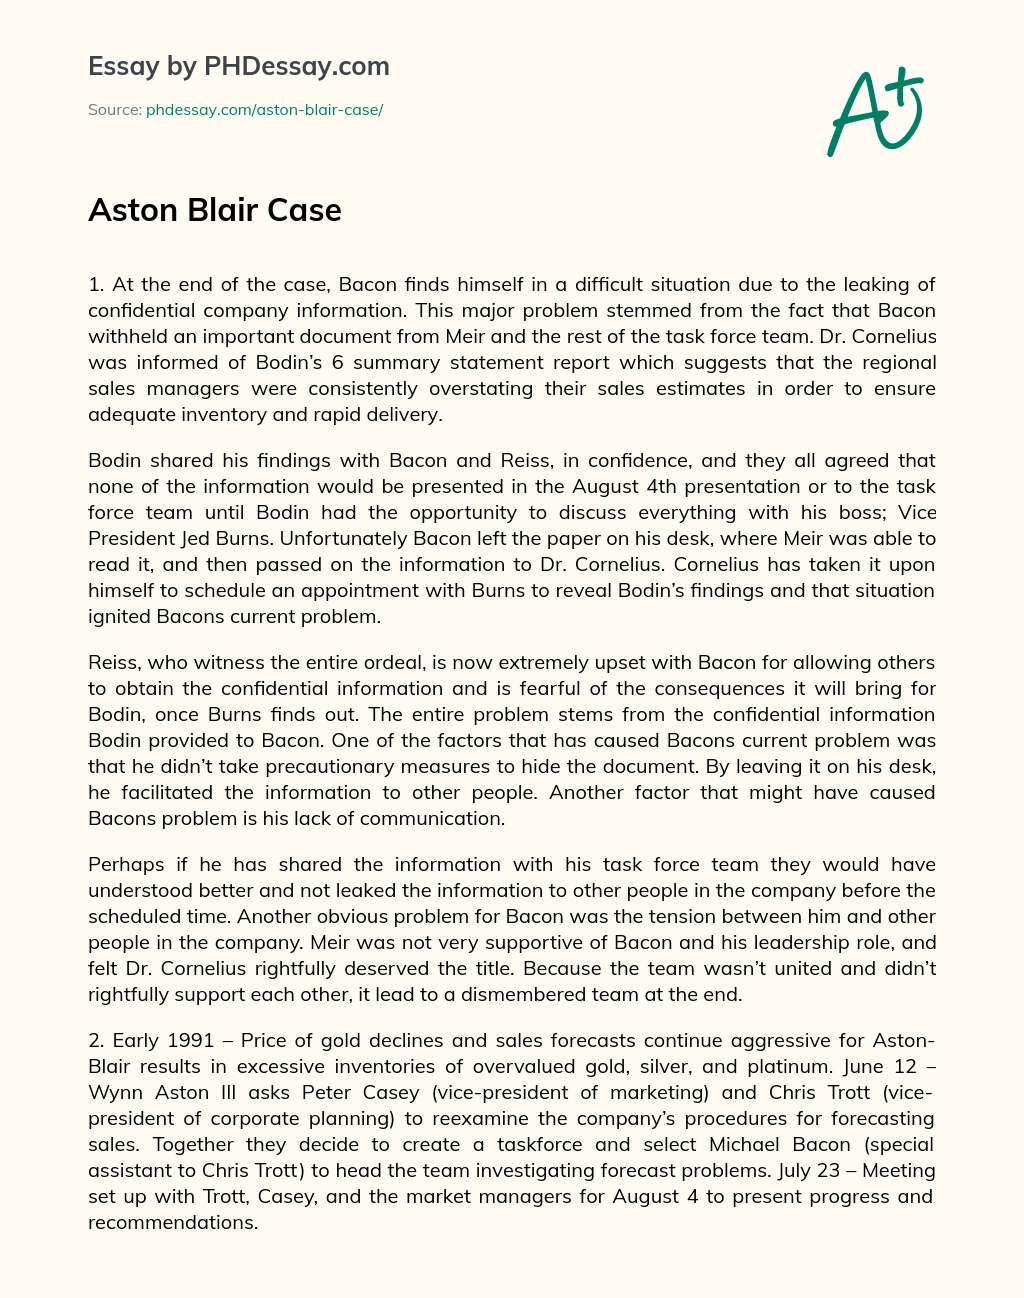 Aston Blair Case essay